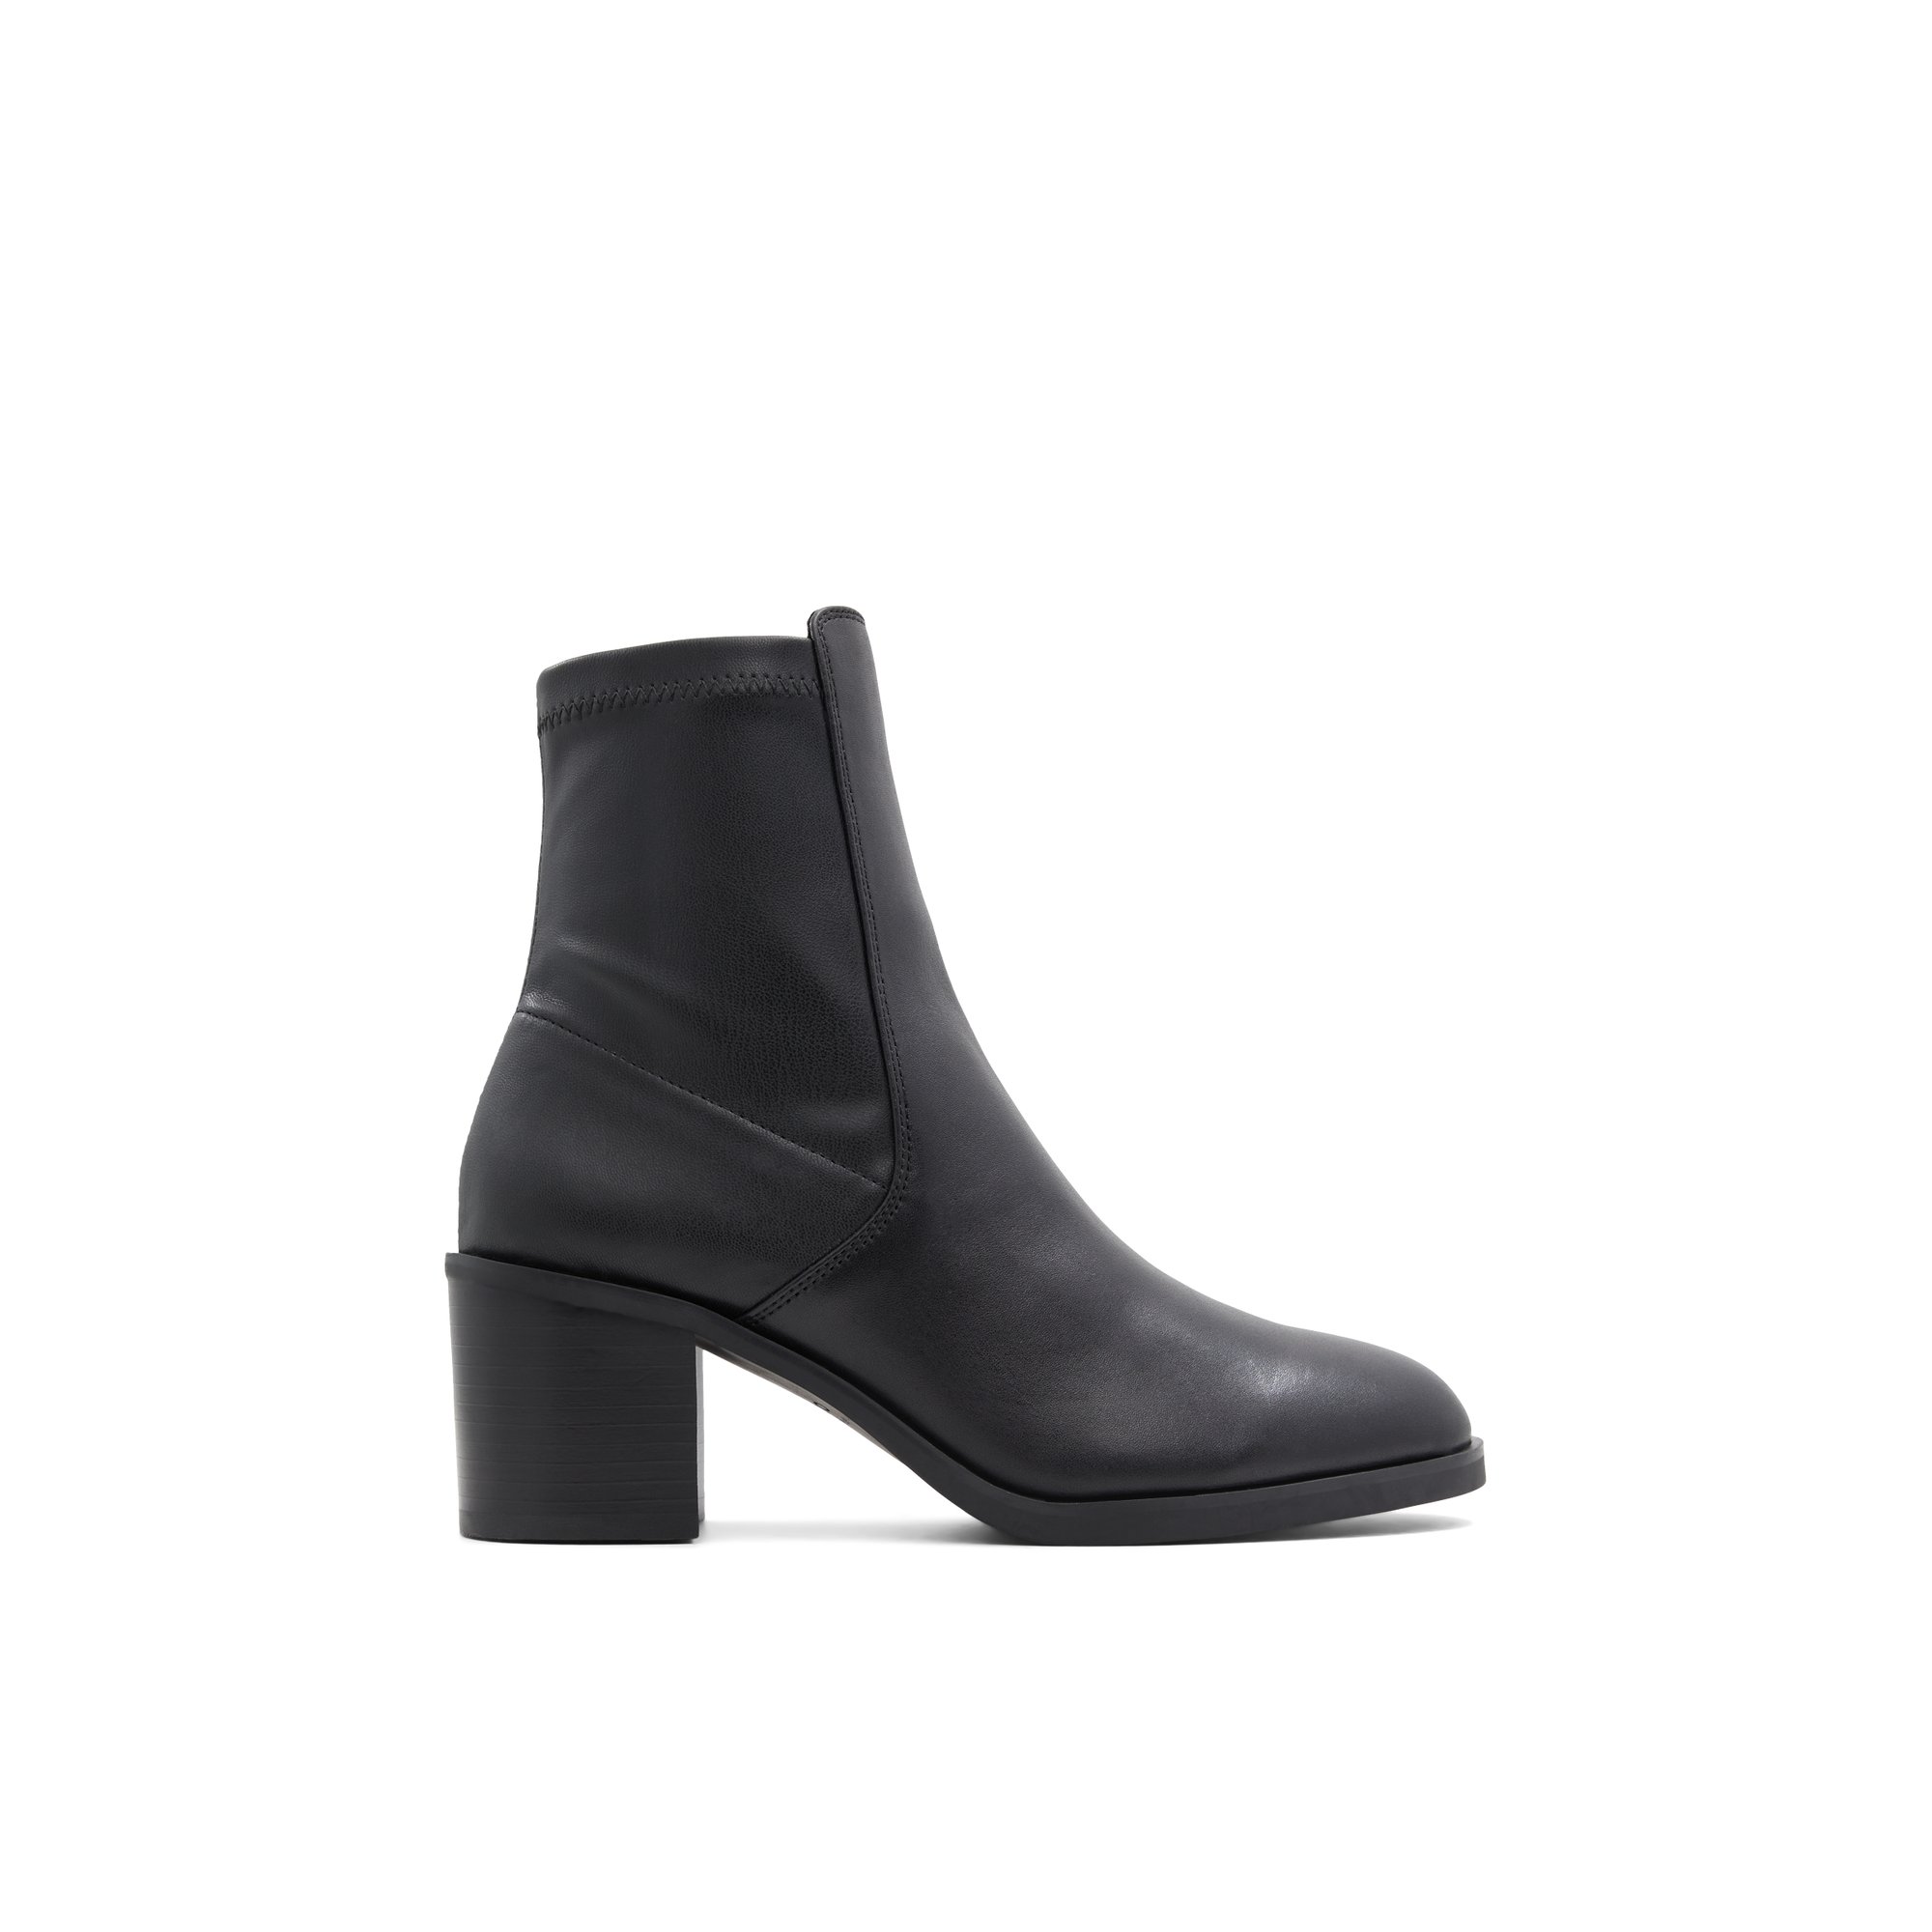 ALDO Ranobrerel - Women's Casual Boot - Black